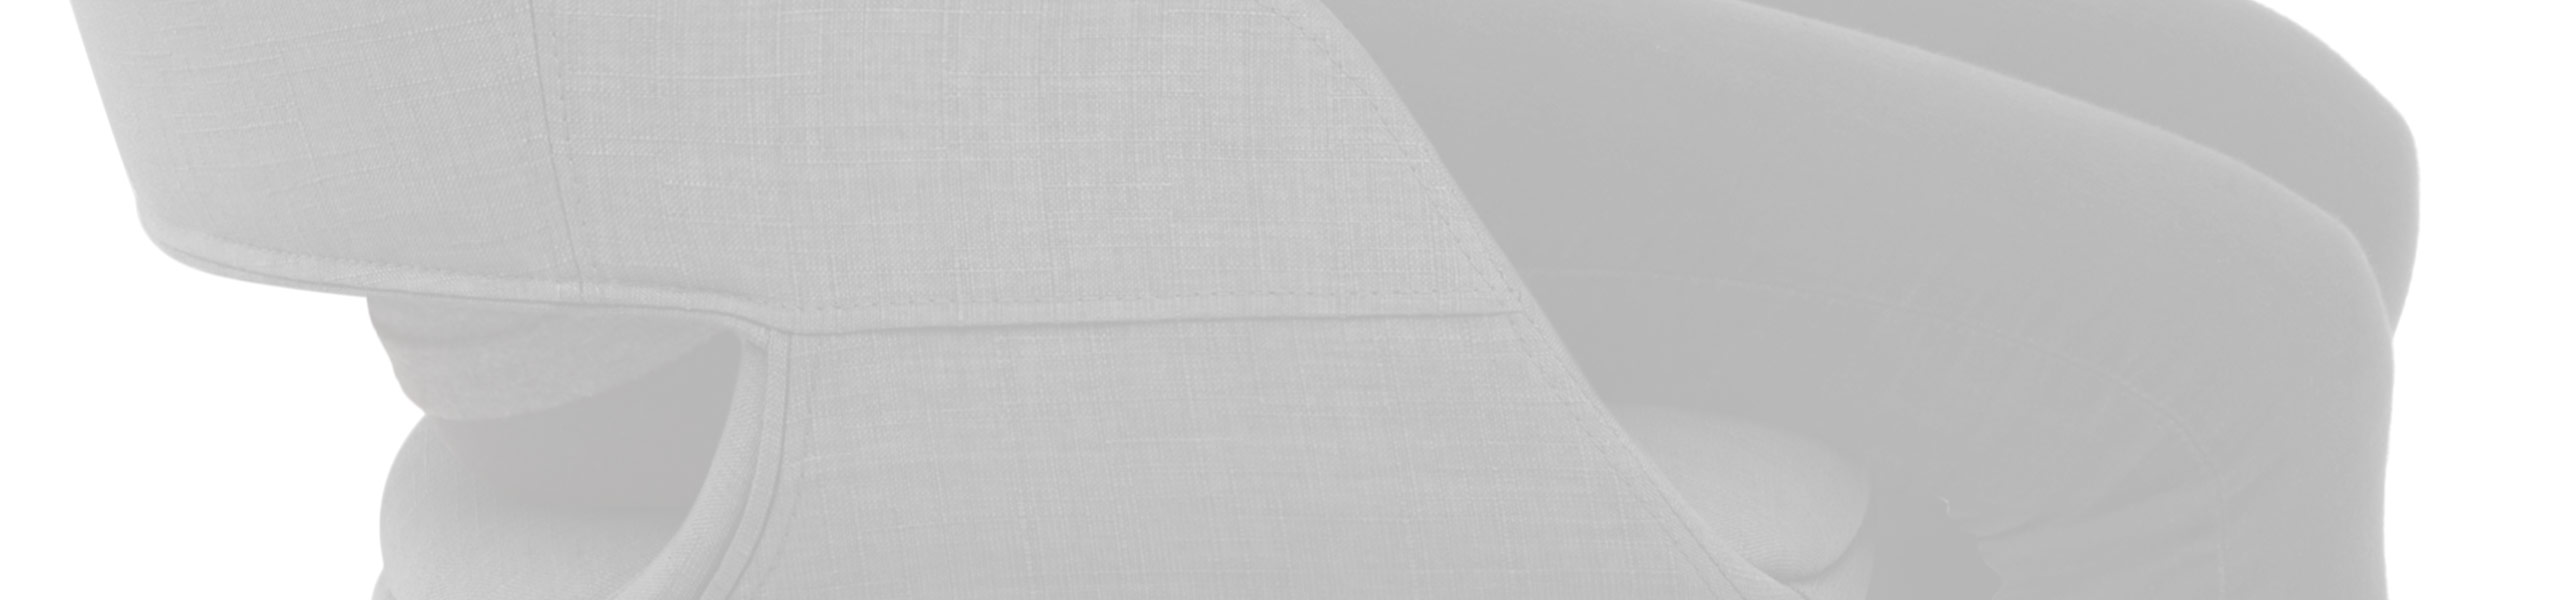 Nappa Bar Stool Charcoal Fabric Review Banner